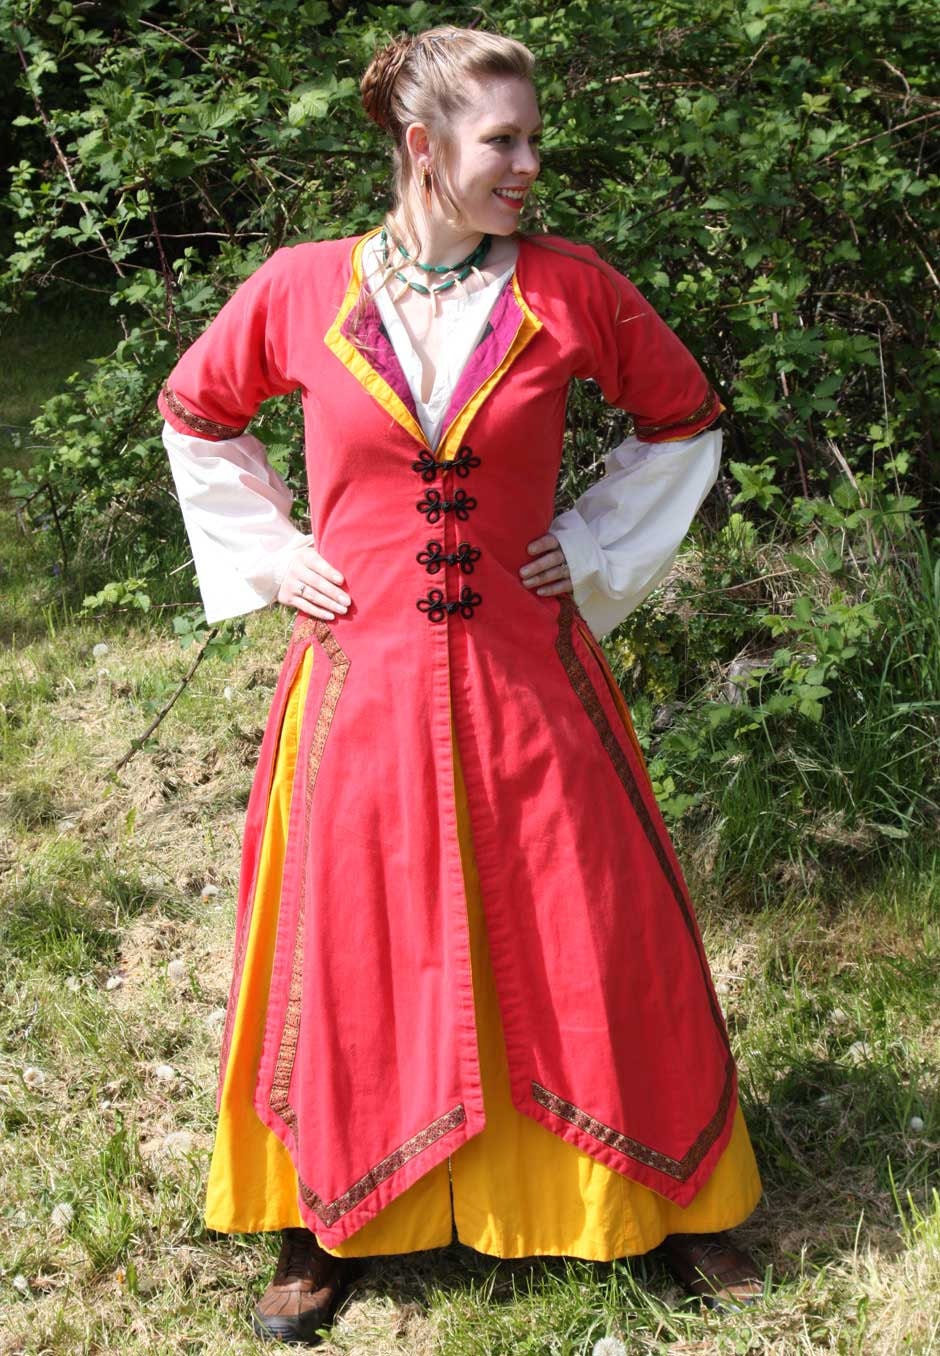 Split Skirt Battle Dress | Battle dress, Medieval clothing, Ancient ...